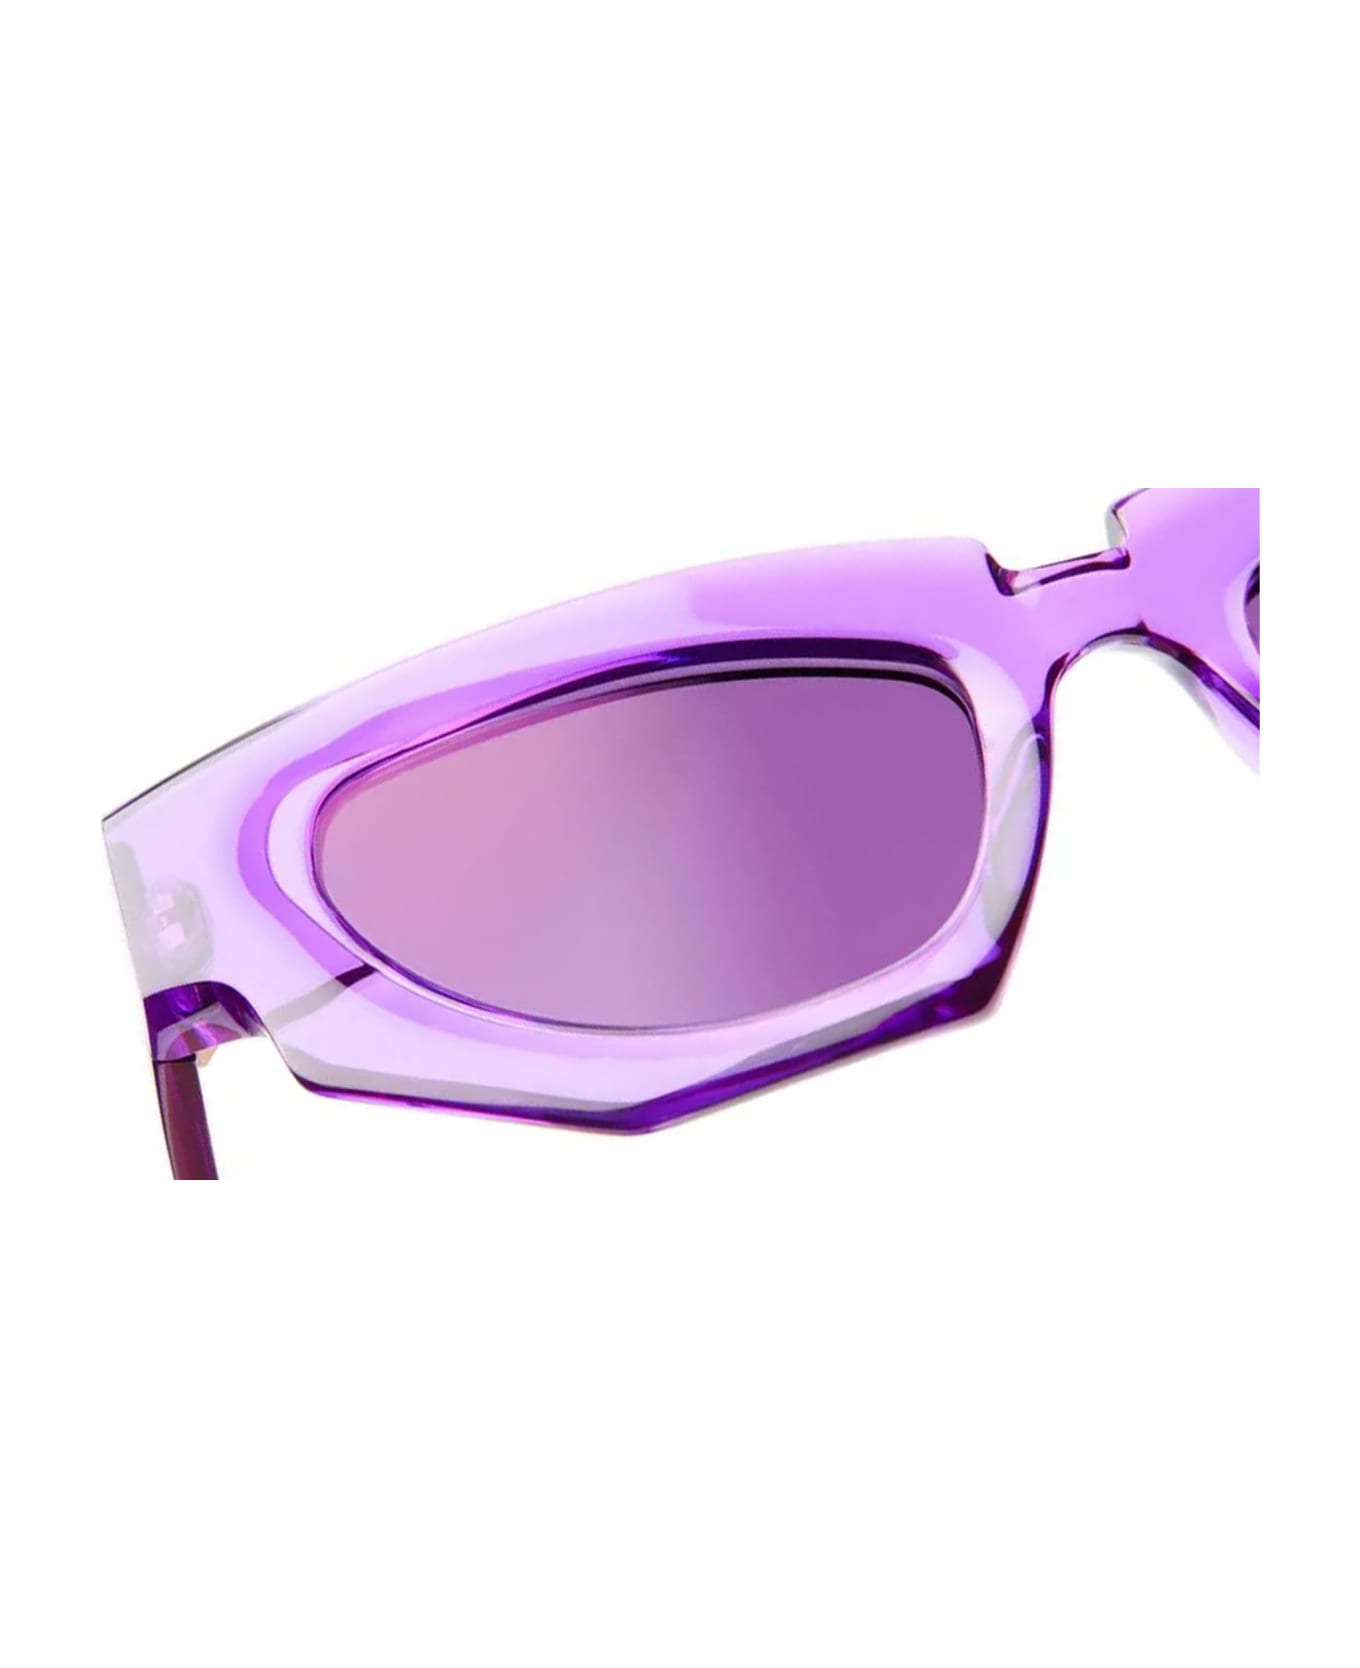 Kuboraum Mask F5 - Amethyst Sunglasses - purple サングラス